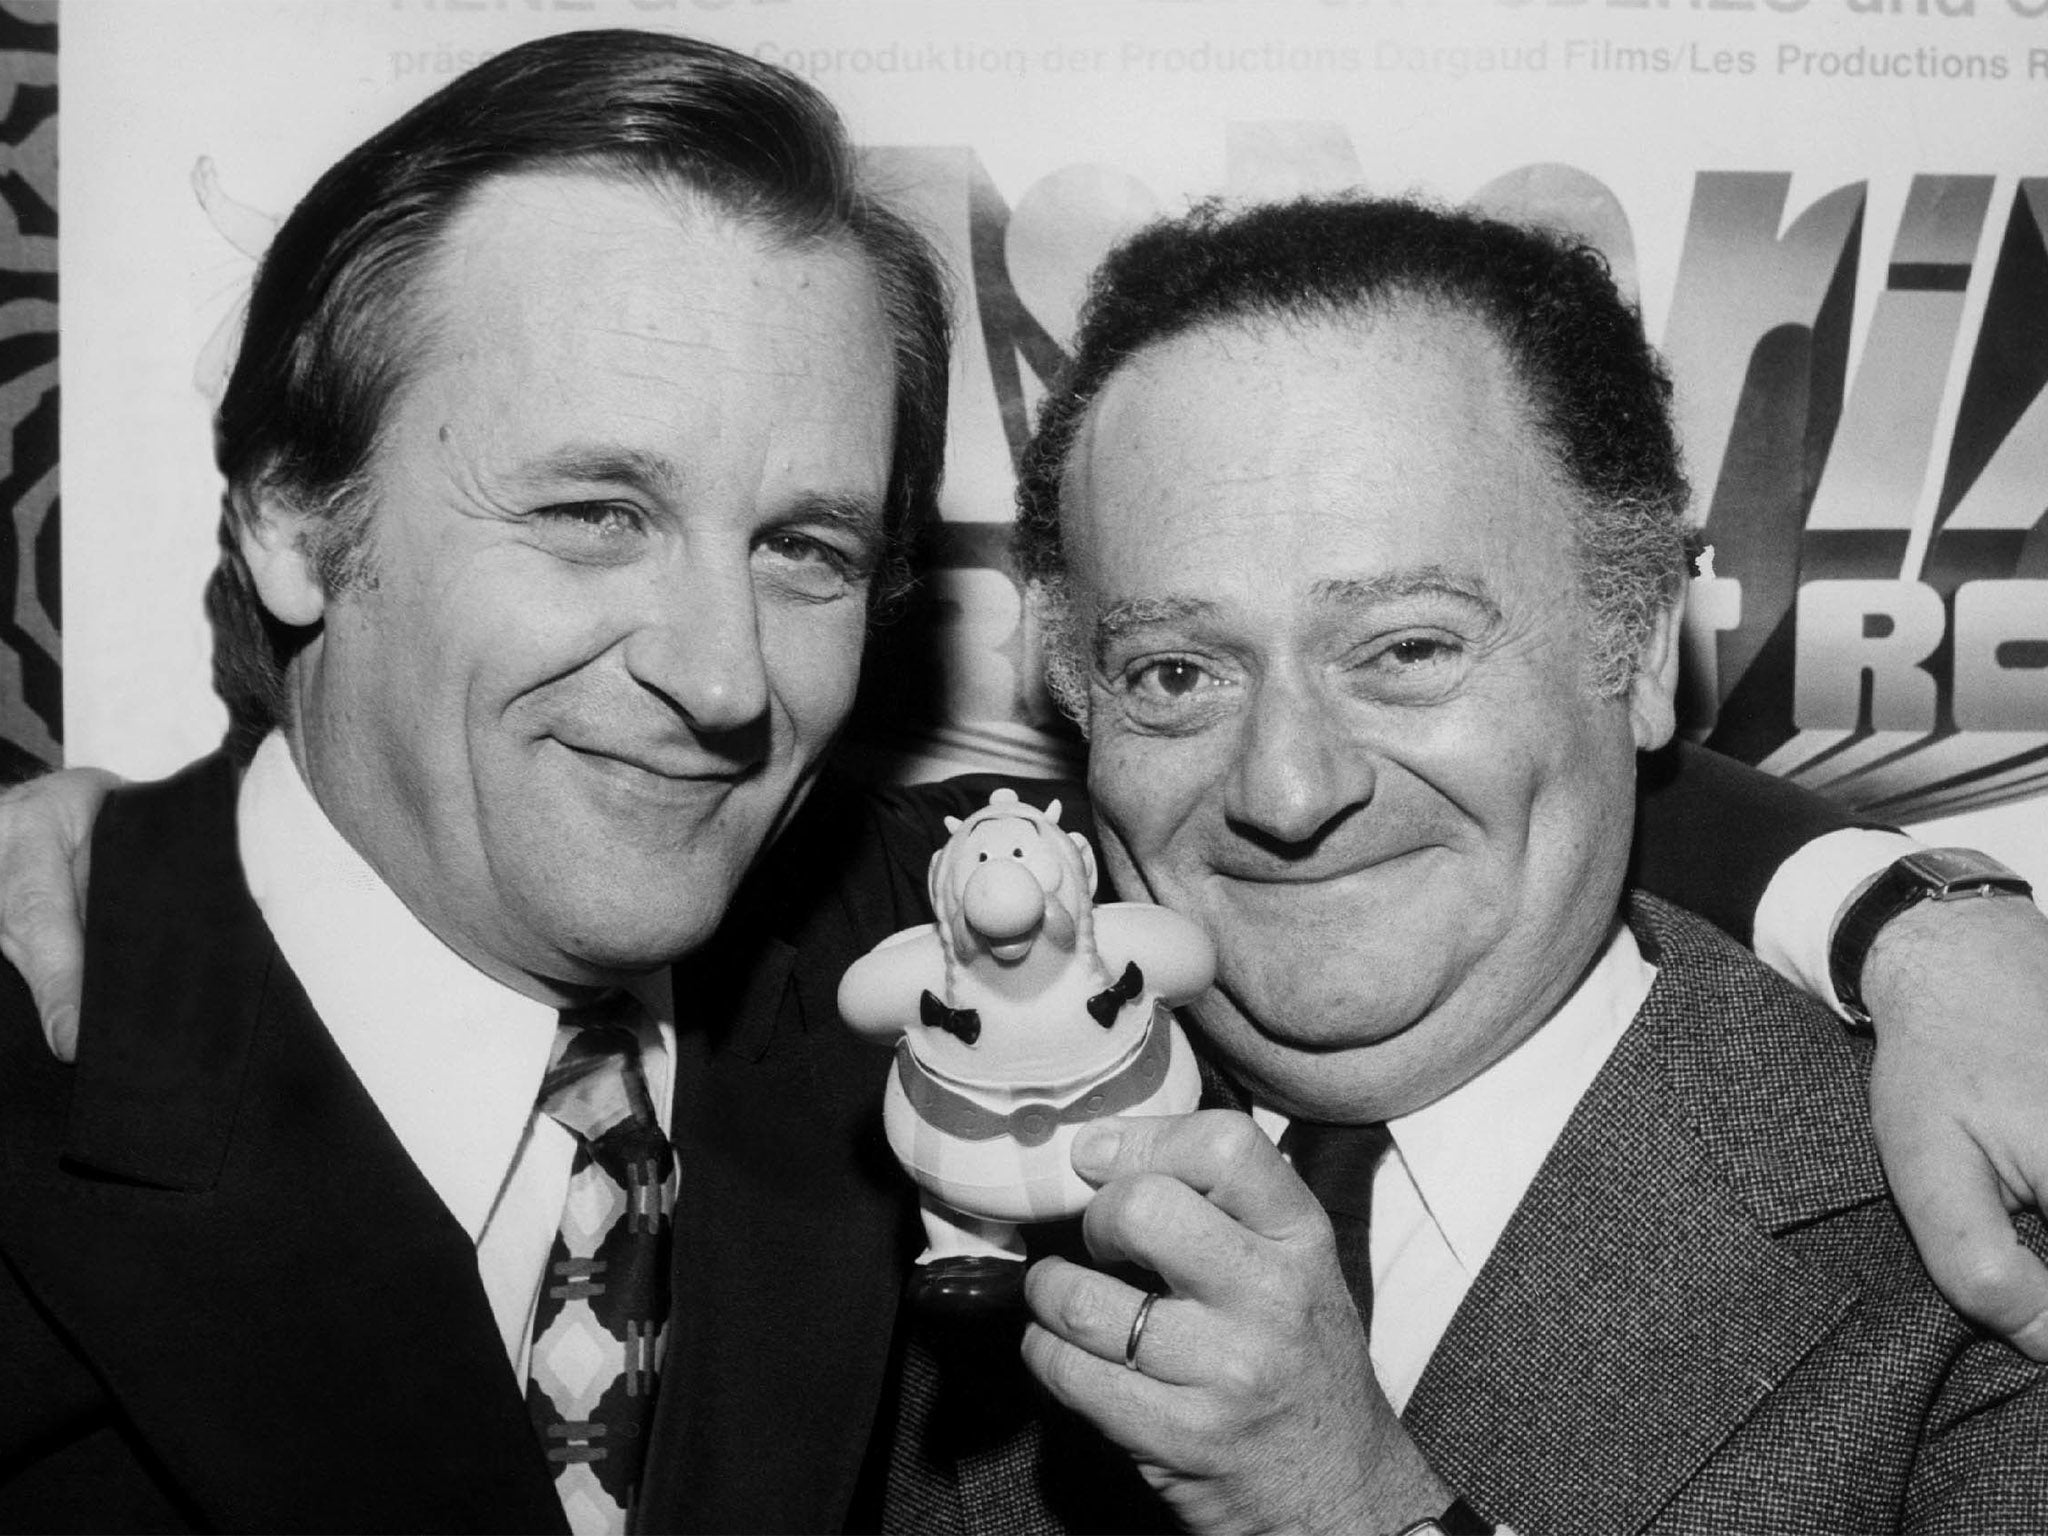 Rene Goscinny (right) with Asterix illustrator Albert Uderzo in 1976